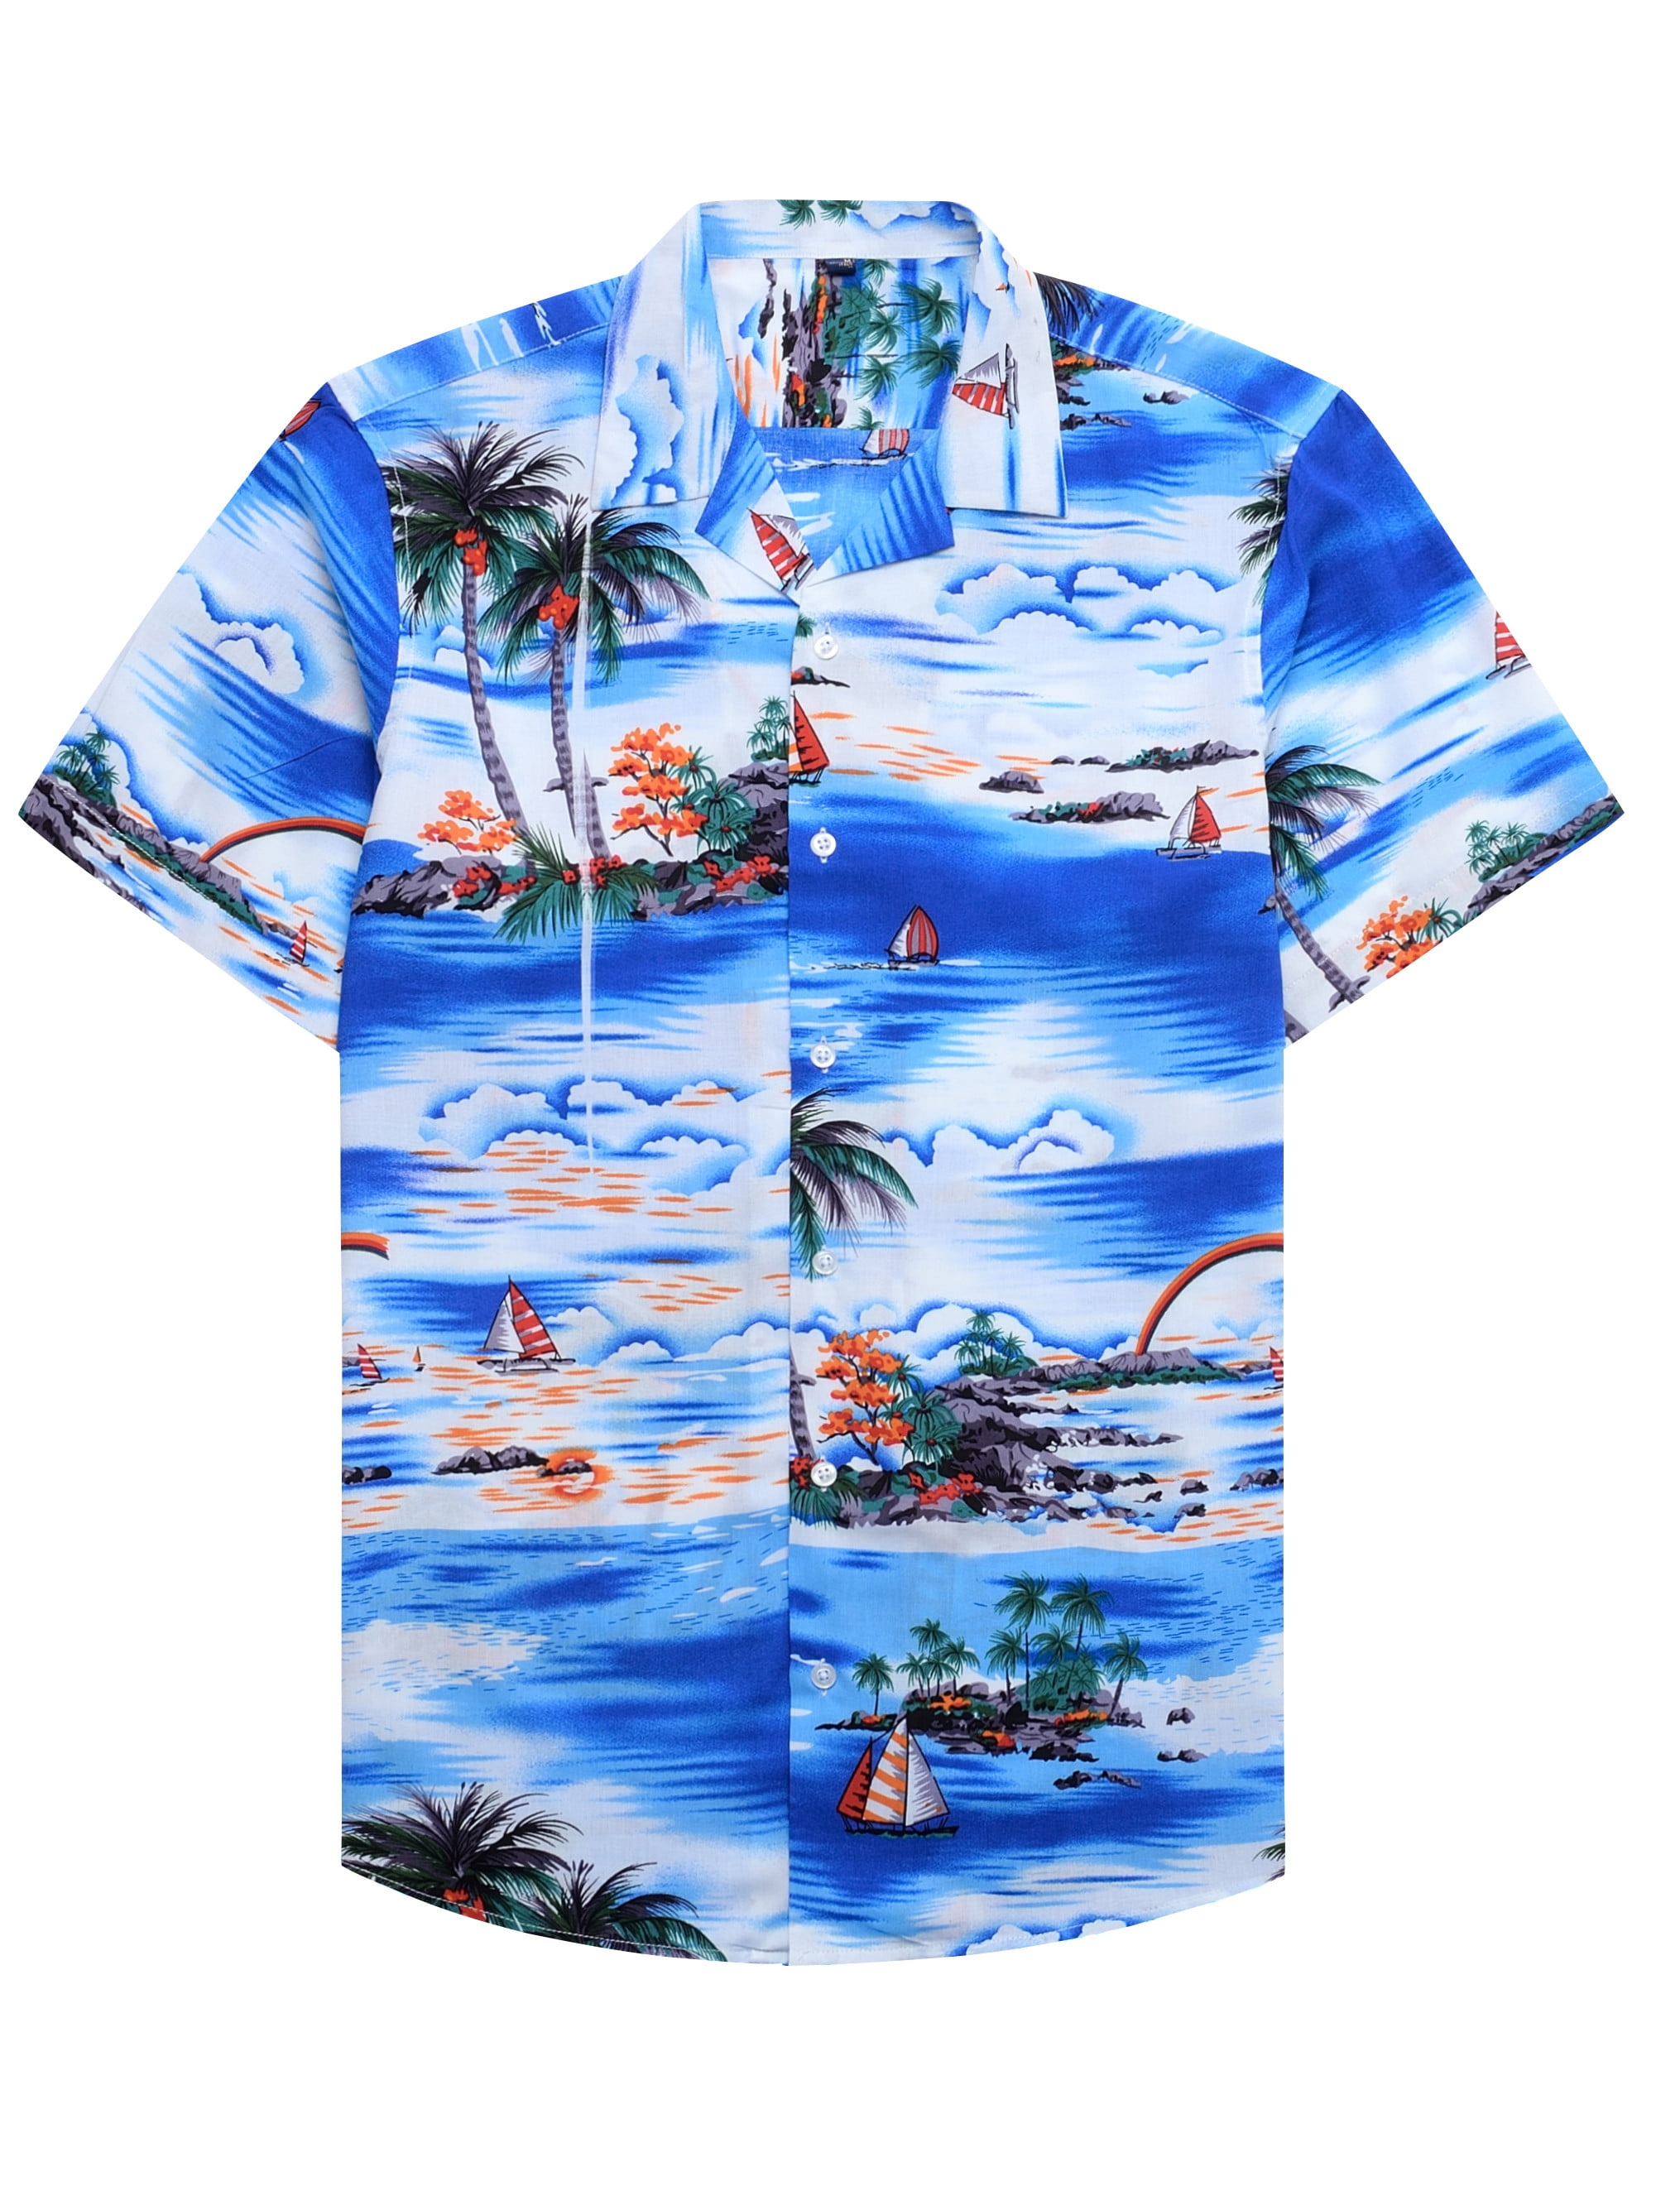 Alimens & Gentle Hawaiian Shirts for Men Short Sleeve Beach Vacation ...